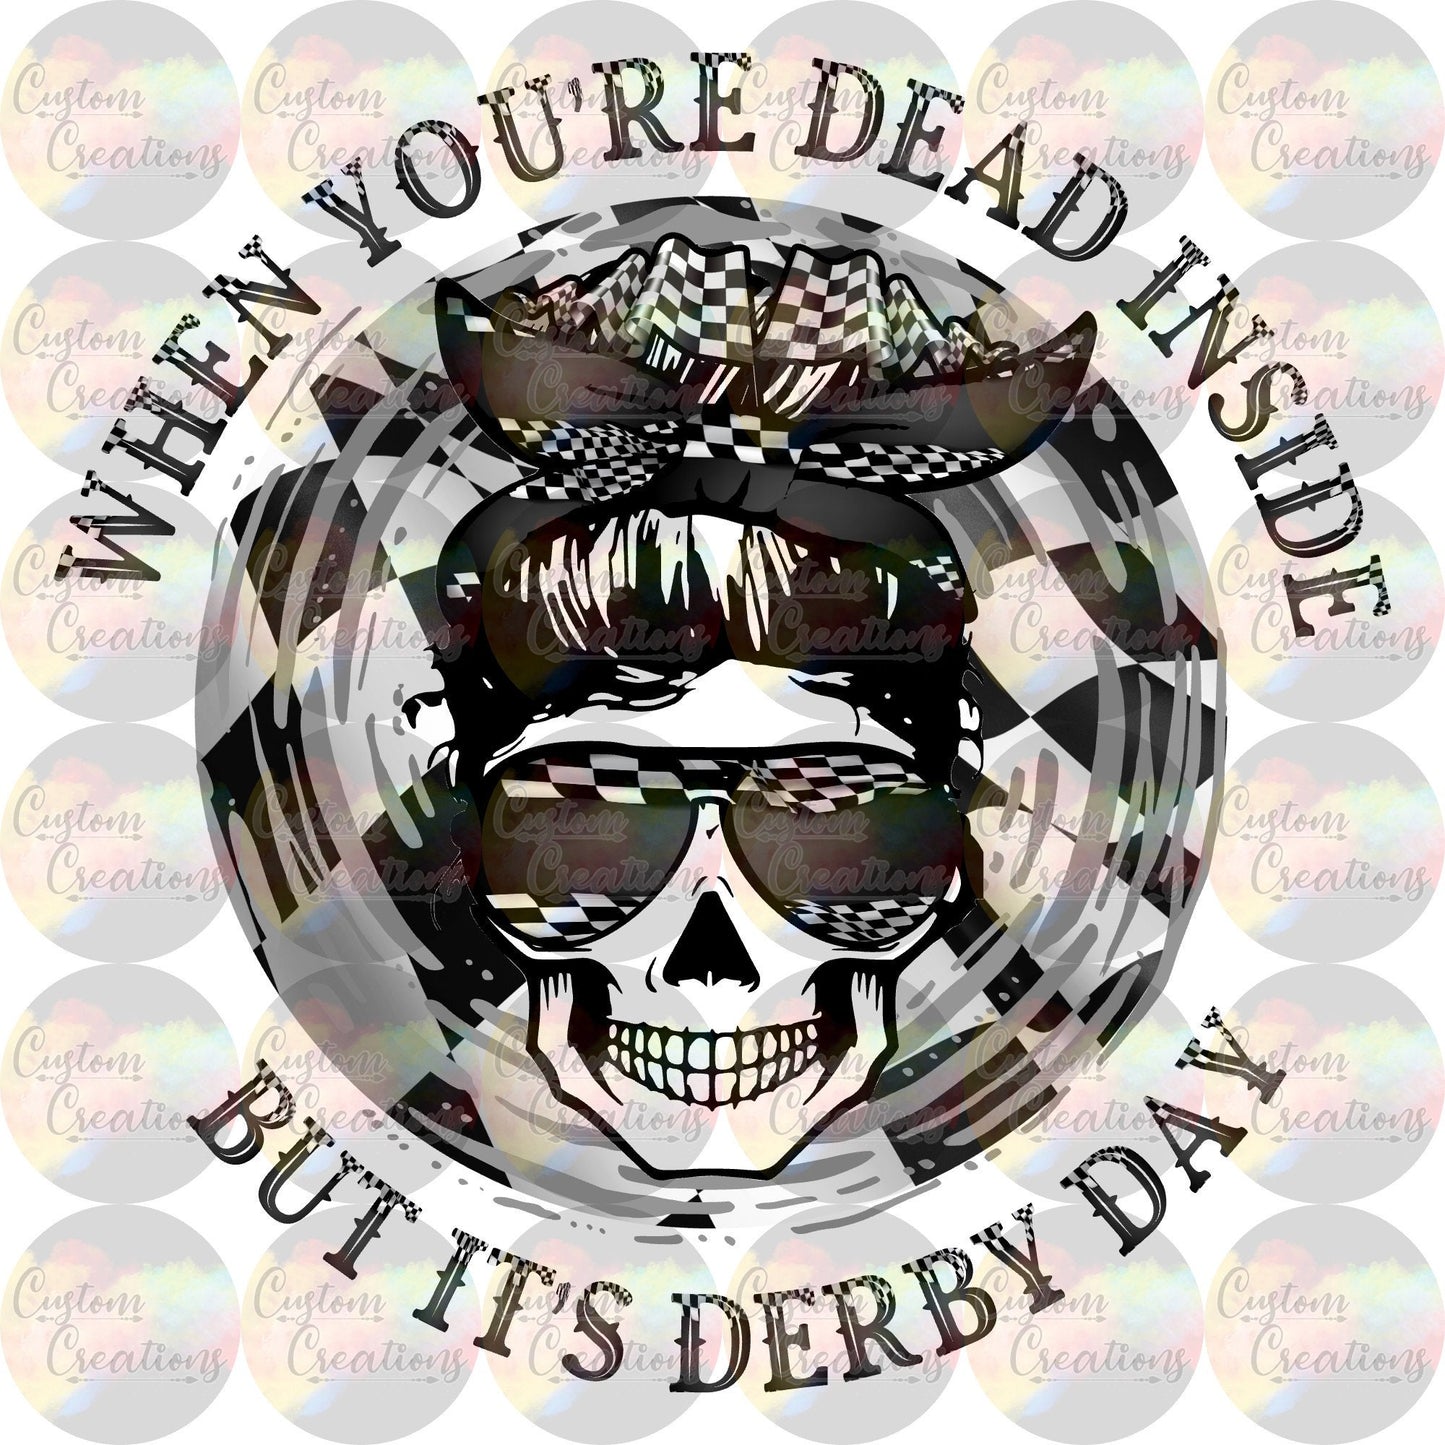 When You're Dead Inside But It's Derby Day 3.5" Clear Laser Printed Waterslide